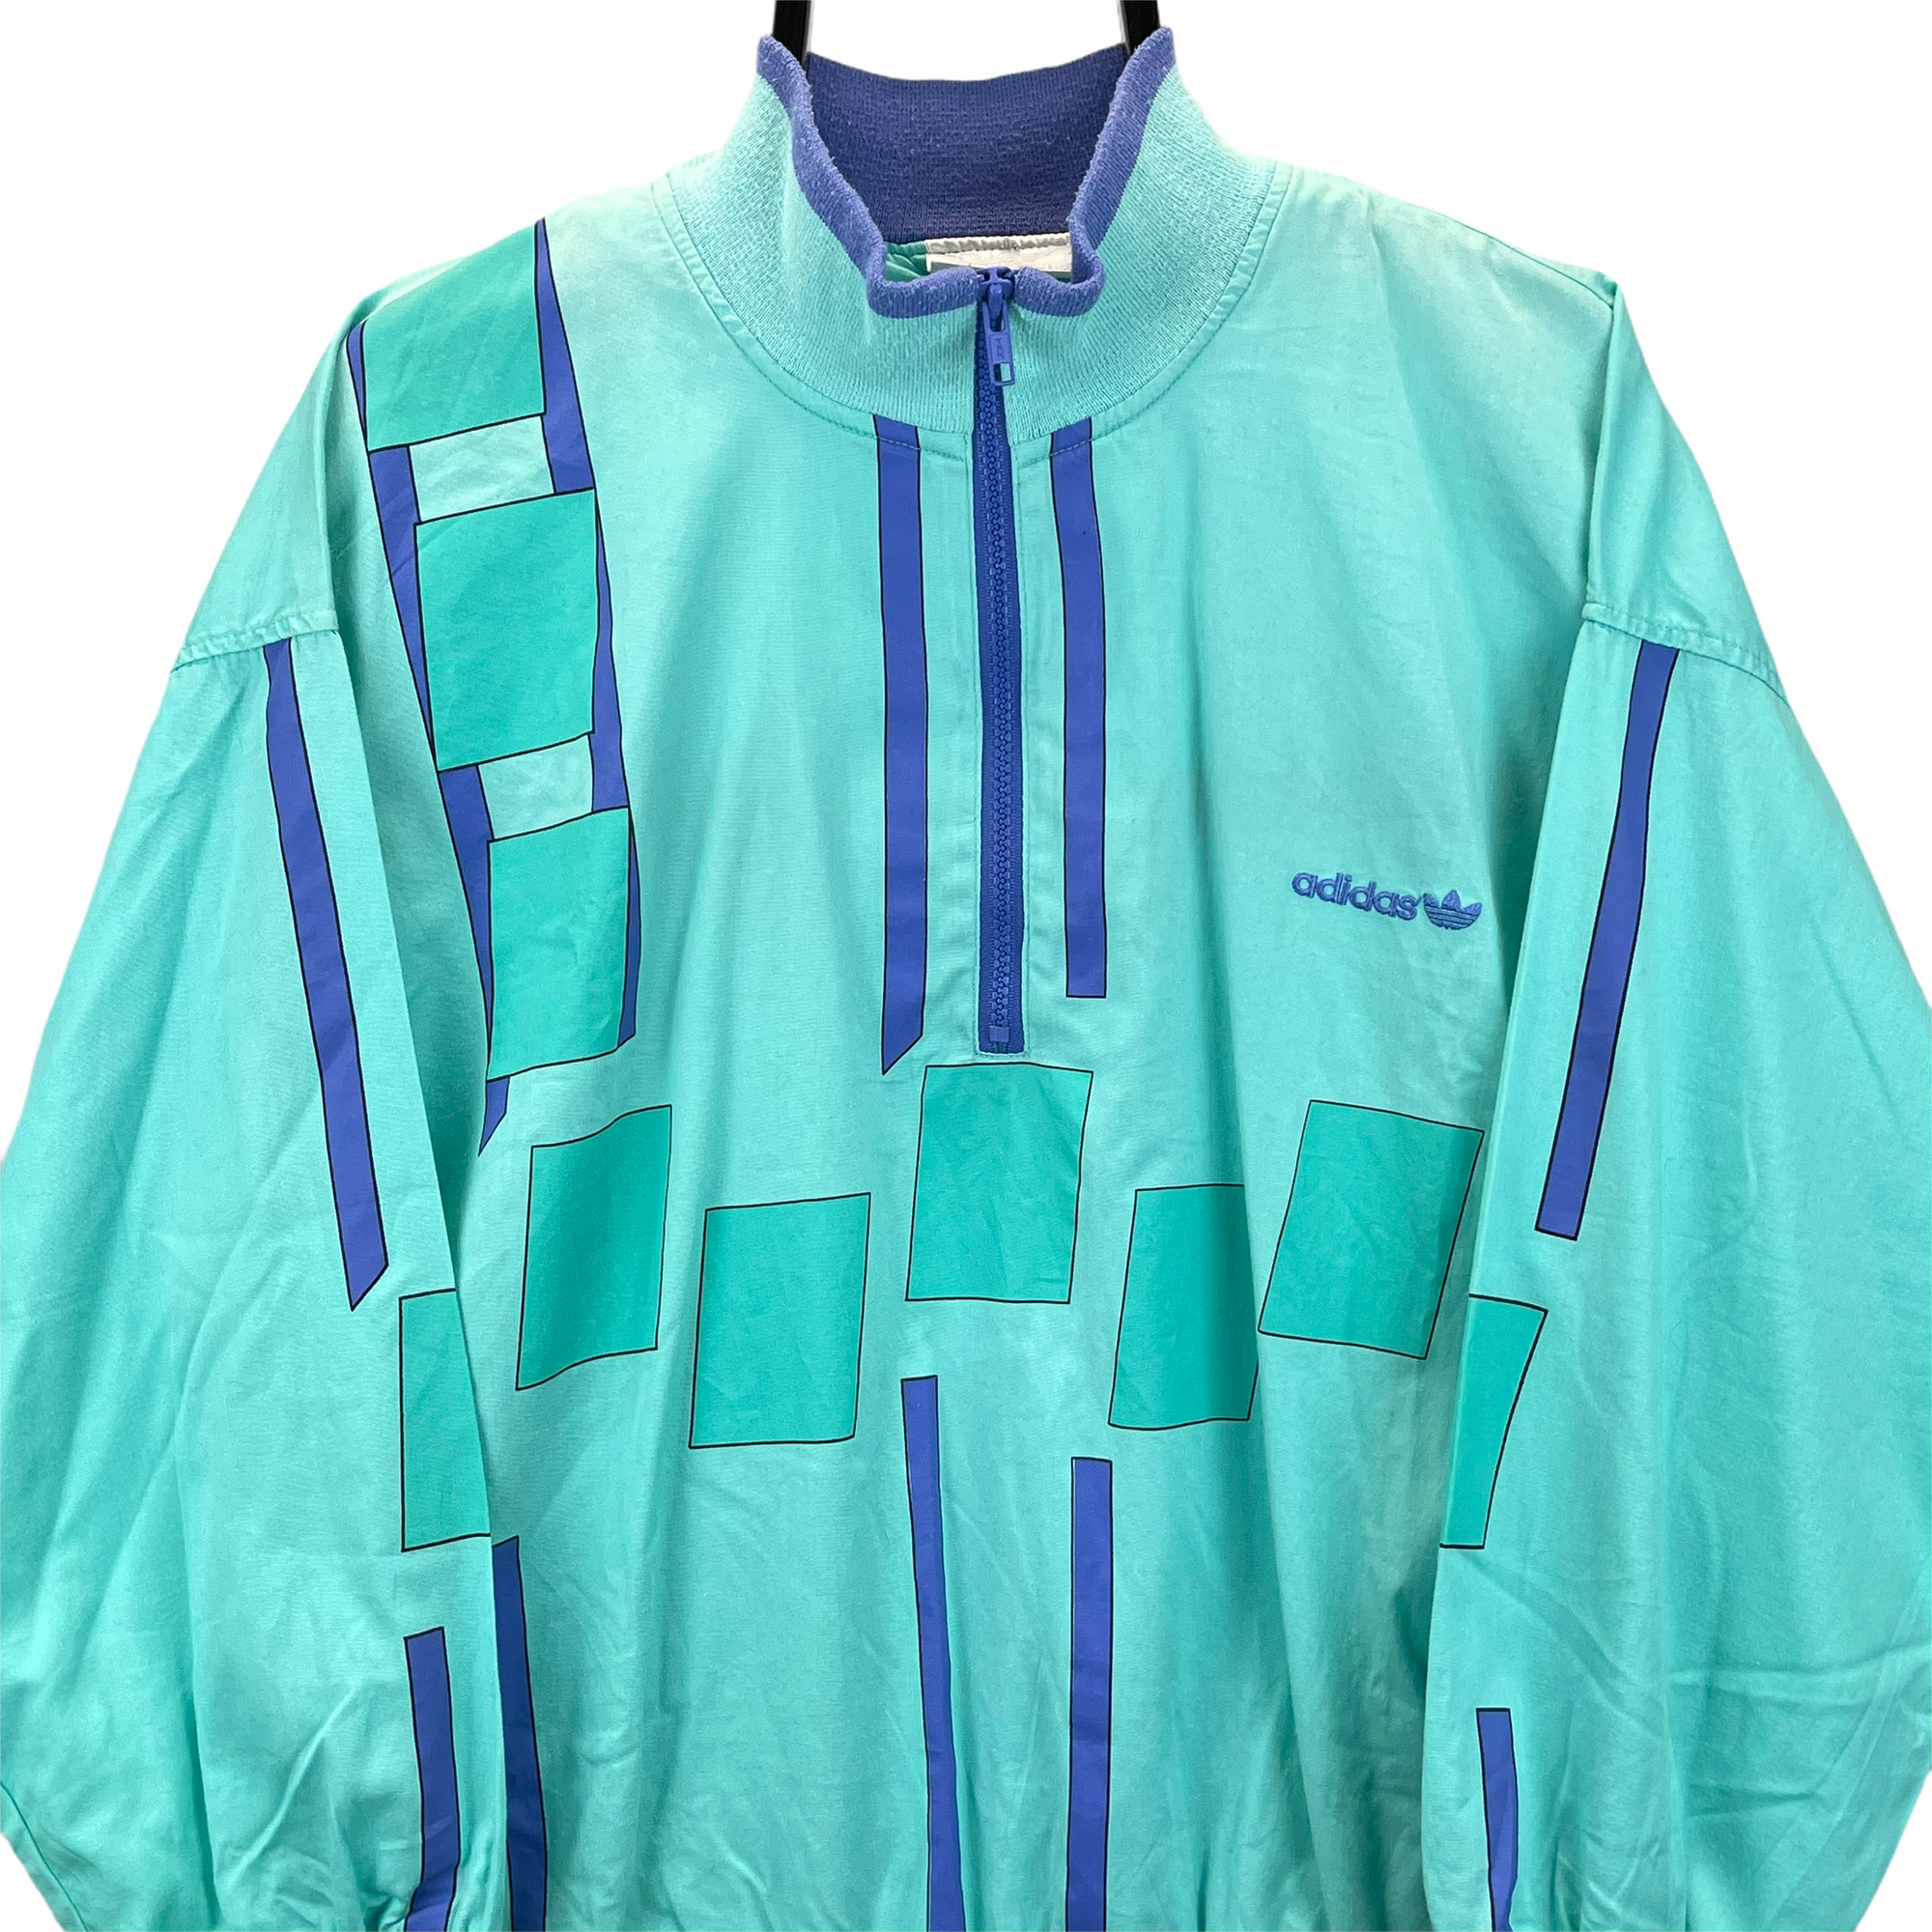 Vintage 90s Adidas 1/4 Zip Track Jacket in Mint & Purple - Men's Medium/Women's Large